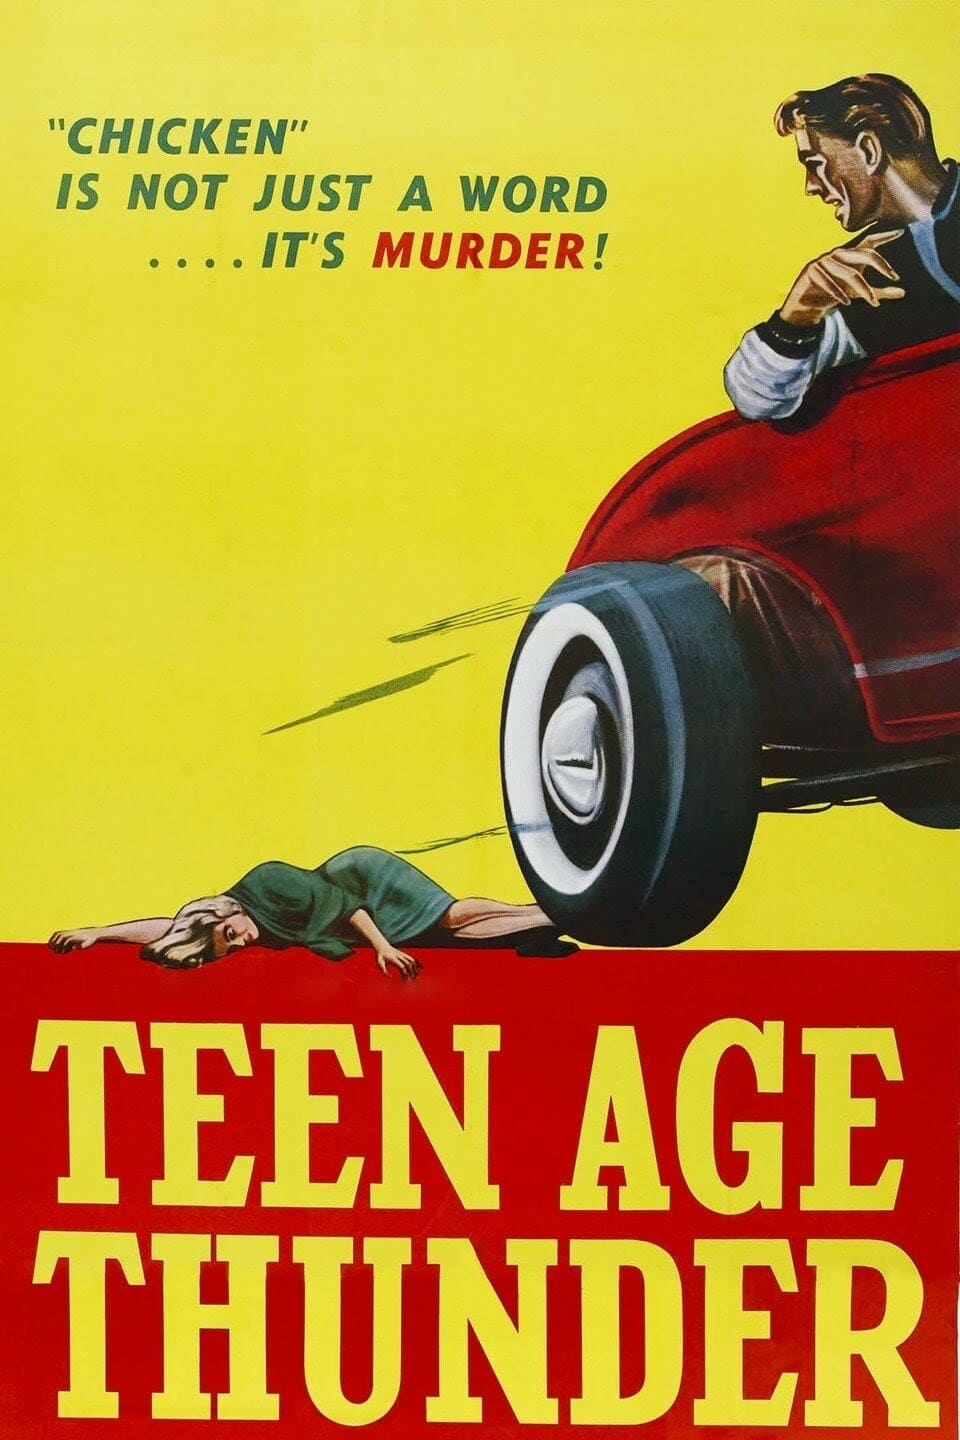 Teenage Thunder (1957)